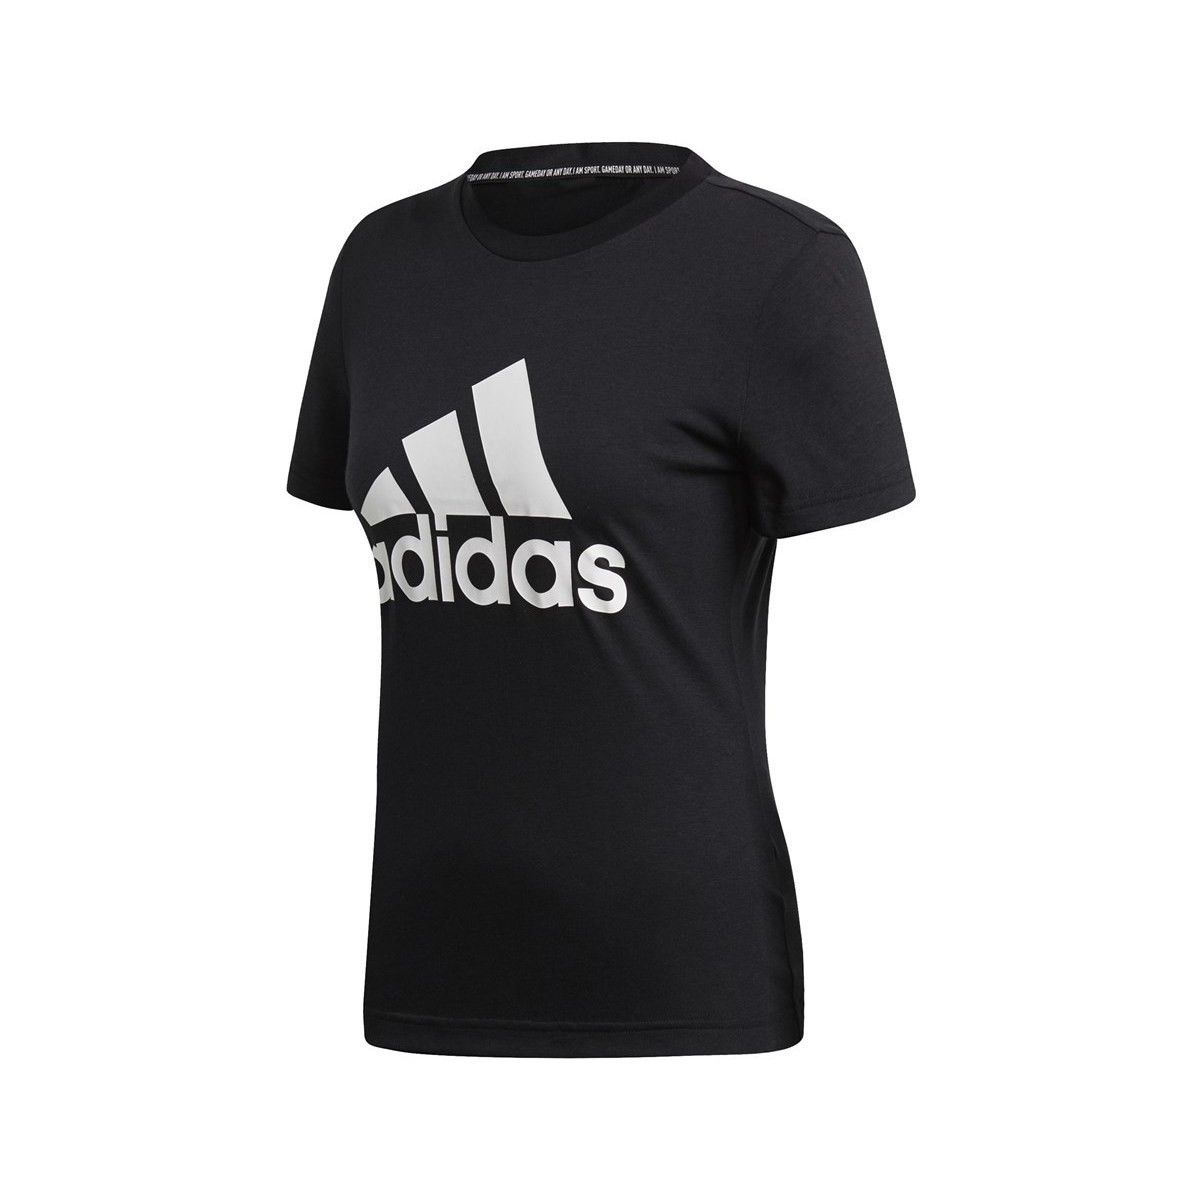 Textil Ženy Trička s krátkým rukávem adidas Originals Must Haves Badge OF Sport Černá